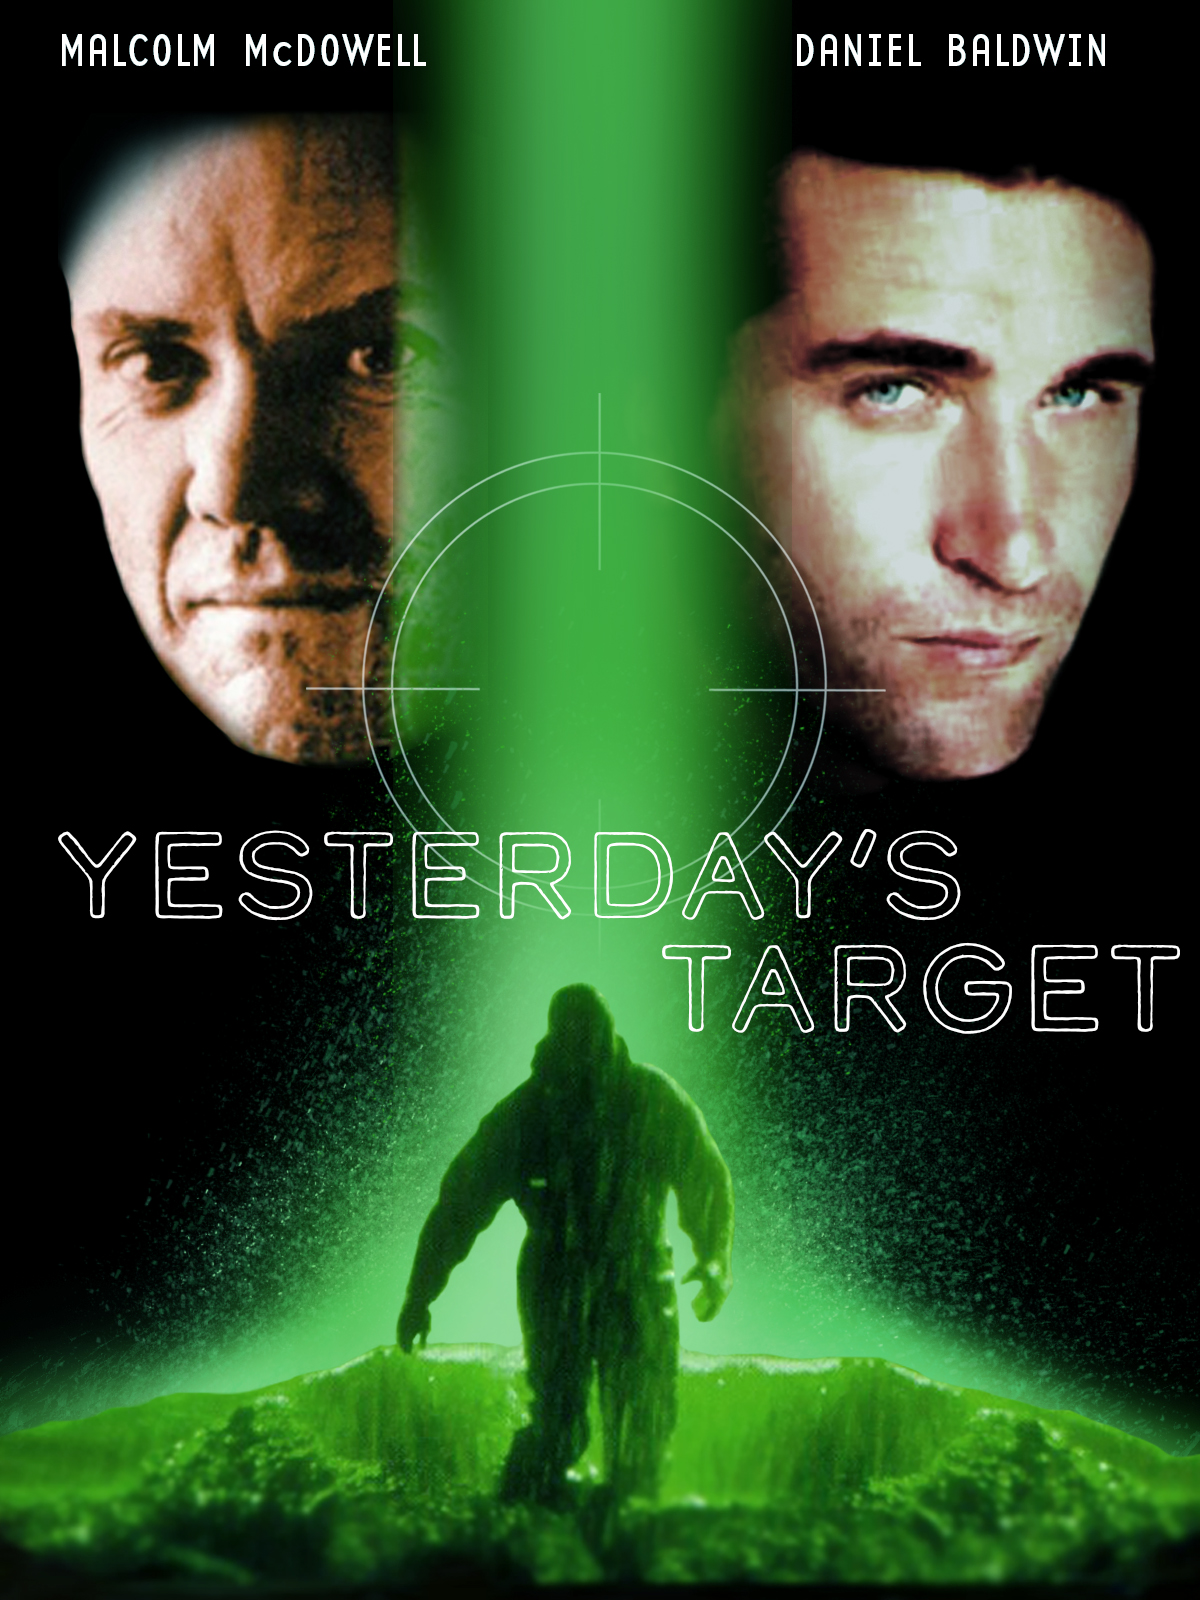 Yesterday's Target (1996) Screenshot 1